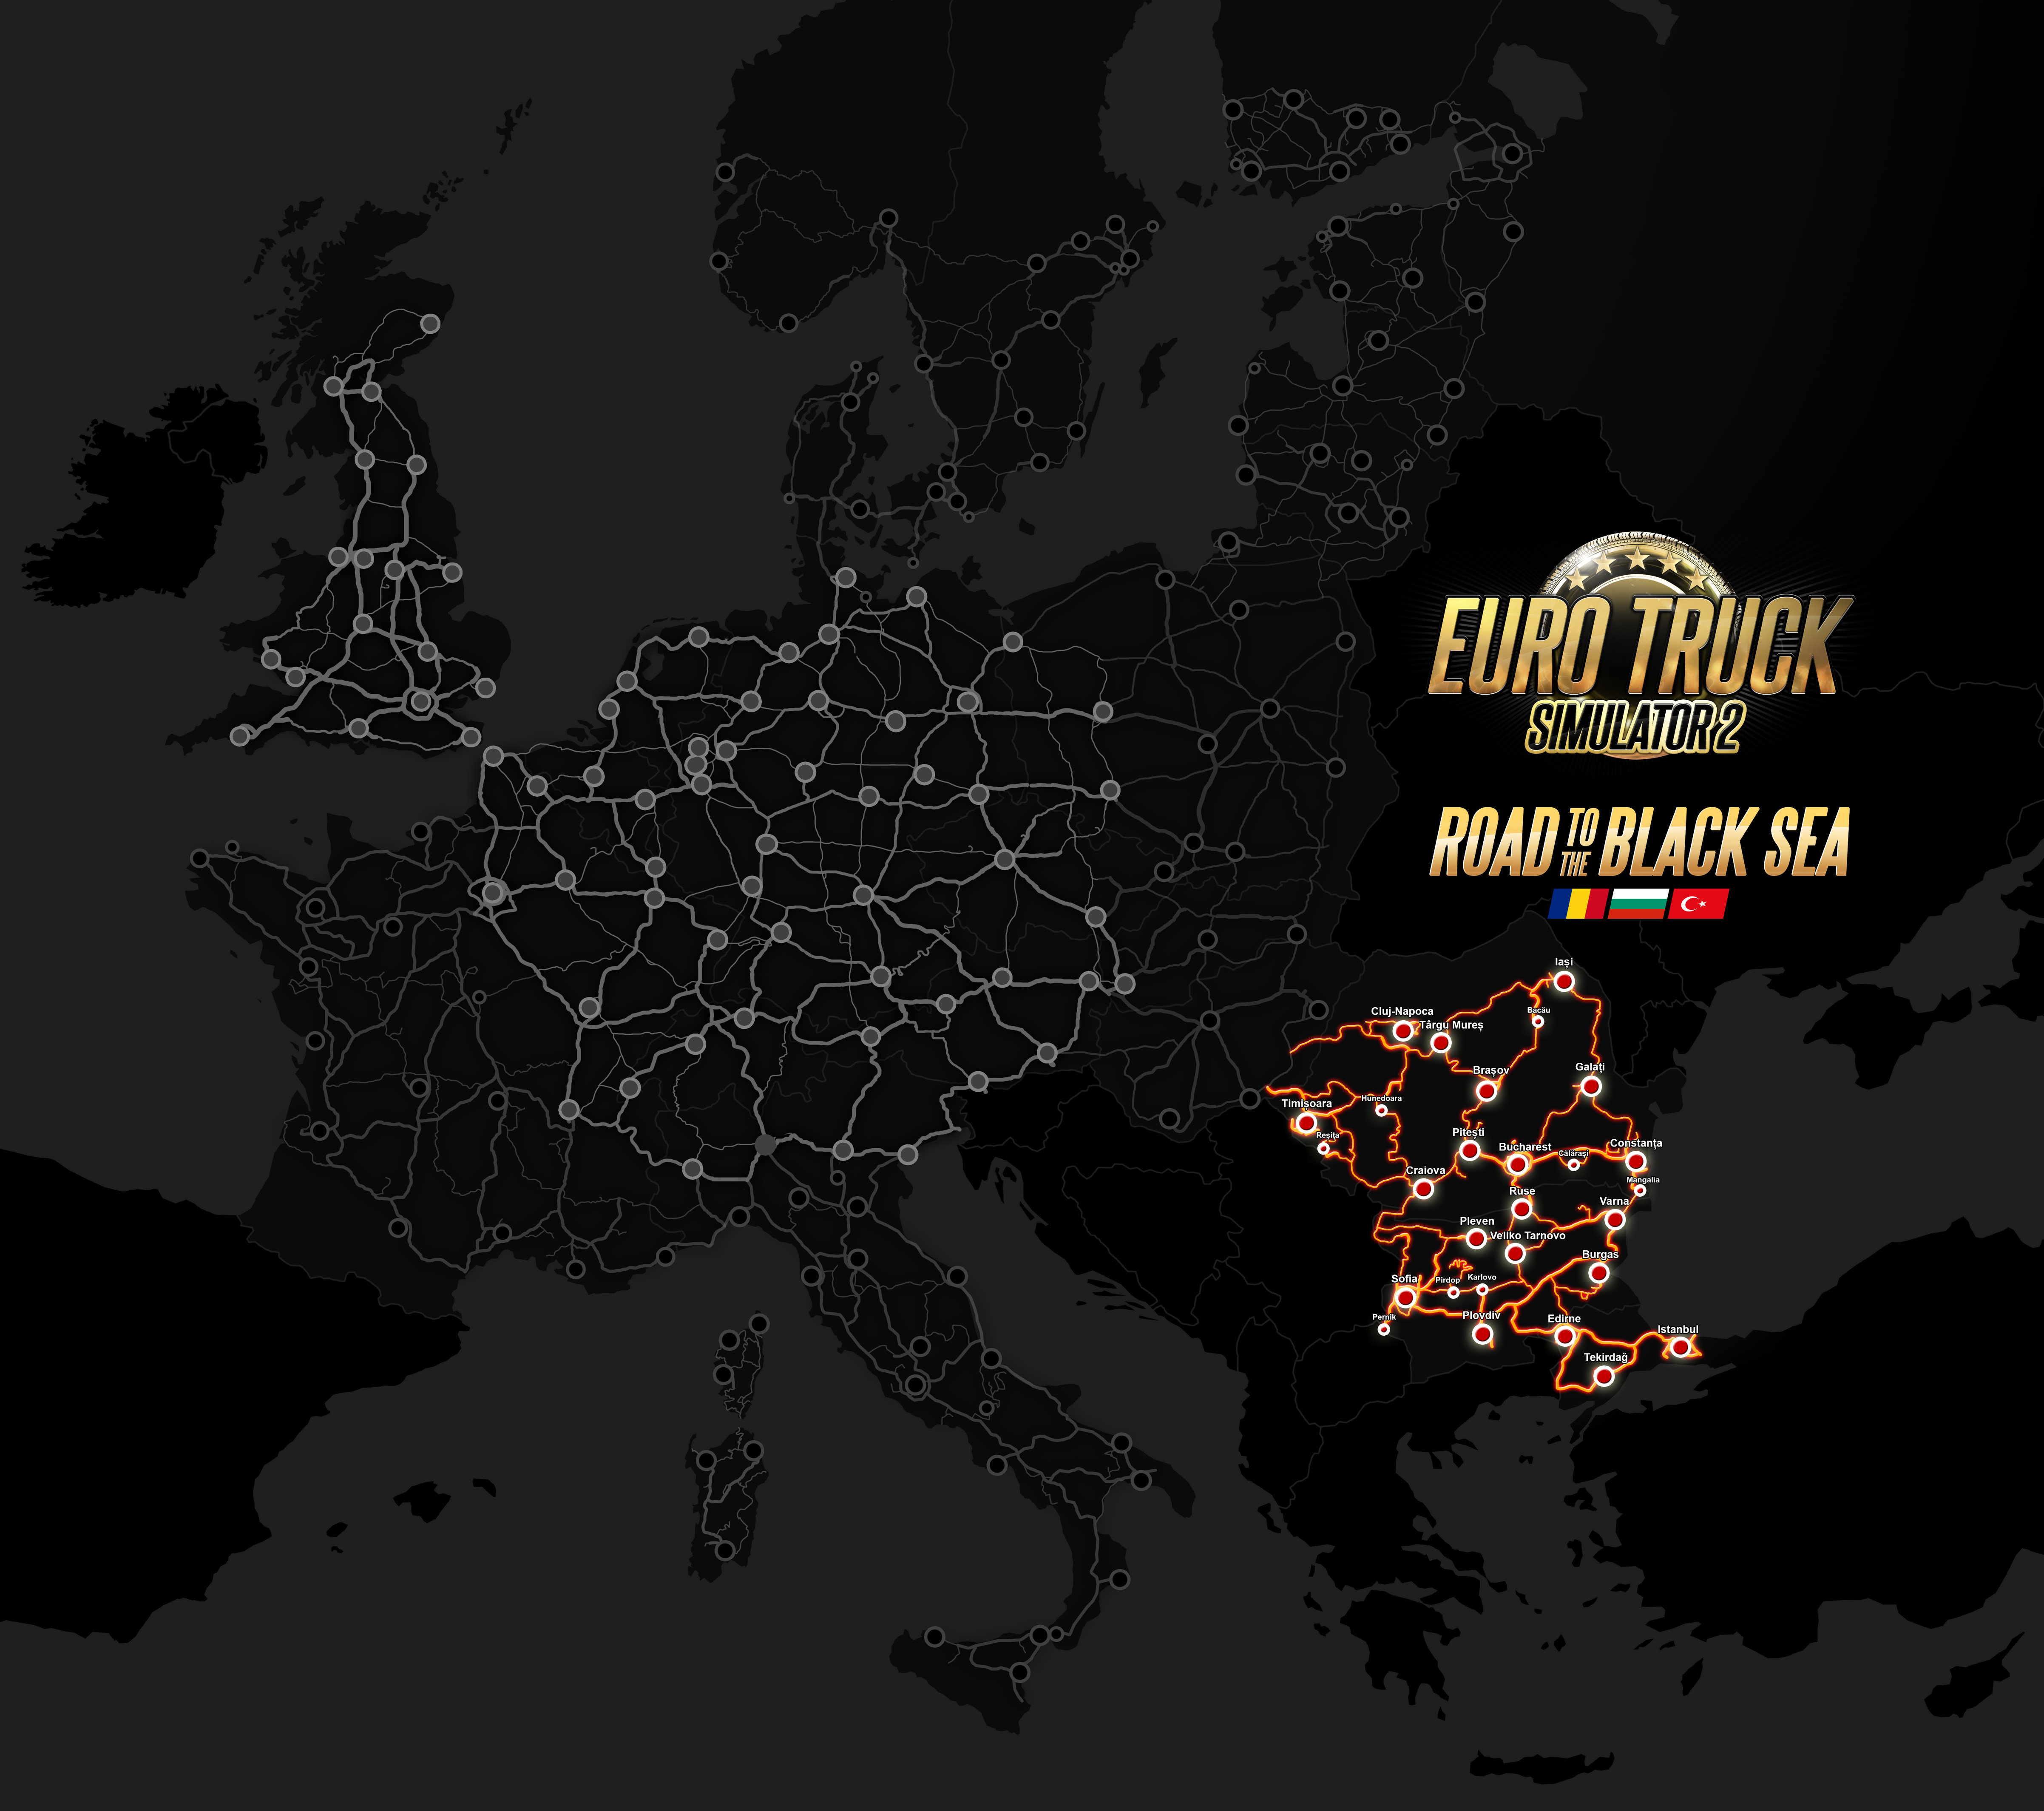 Етс2 длс. Euro Truck Simulator 2 карта DLC. Road to the Black Sea ETS 2 Map. Euro Truck Simulator 2 Road to the Black Sea карта. ETS 2 Road to the Black Sea карта.